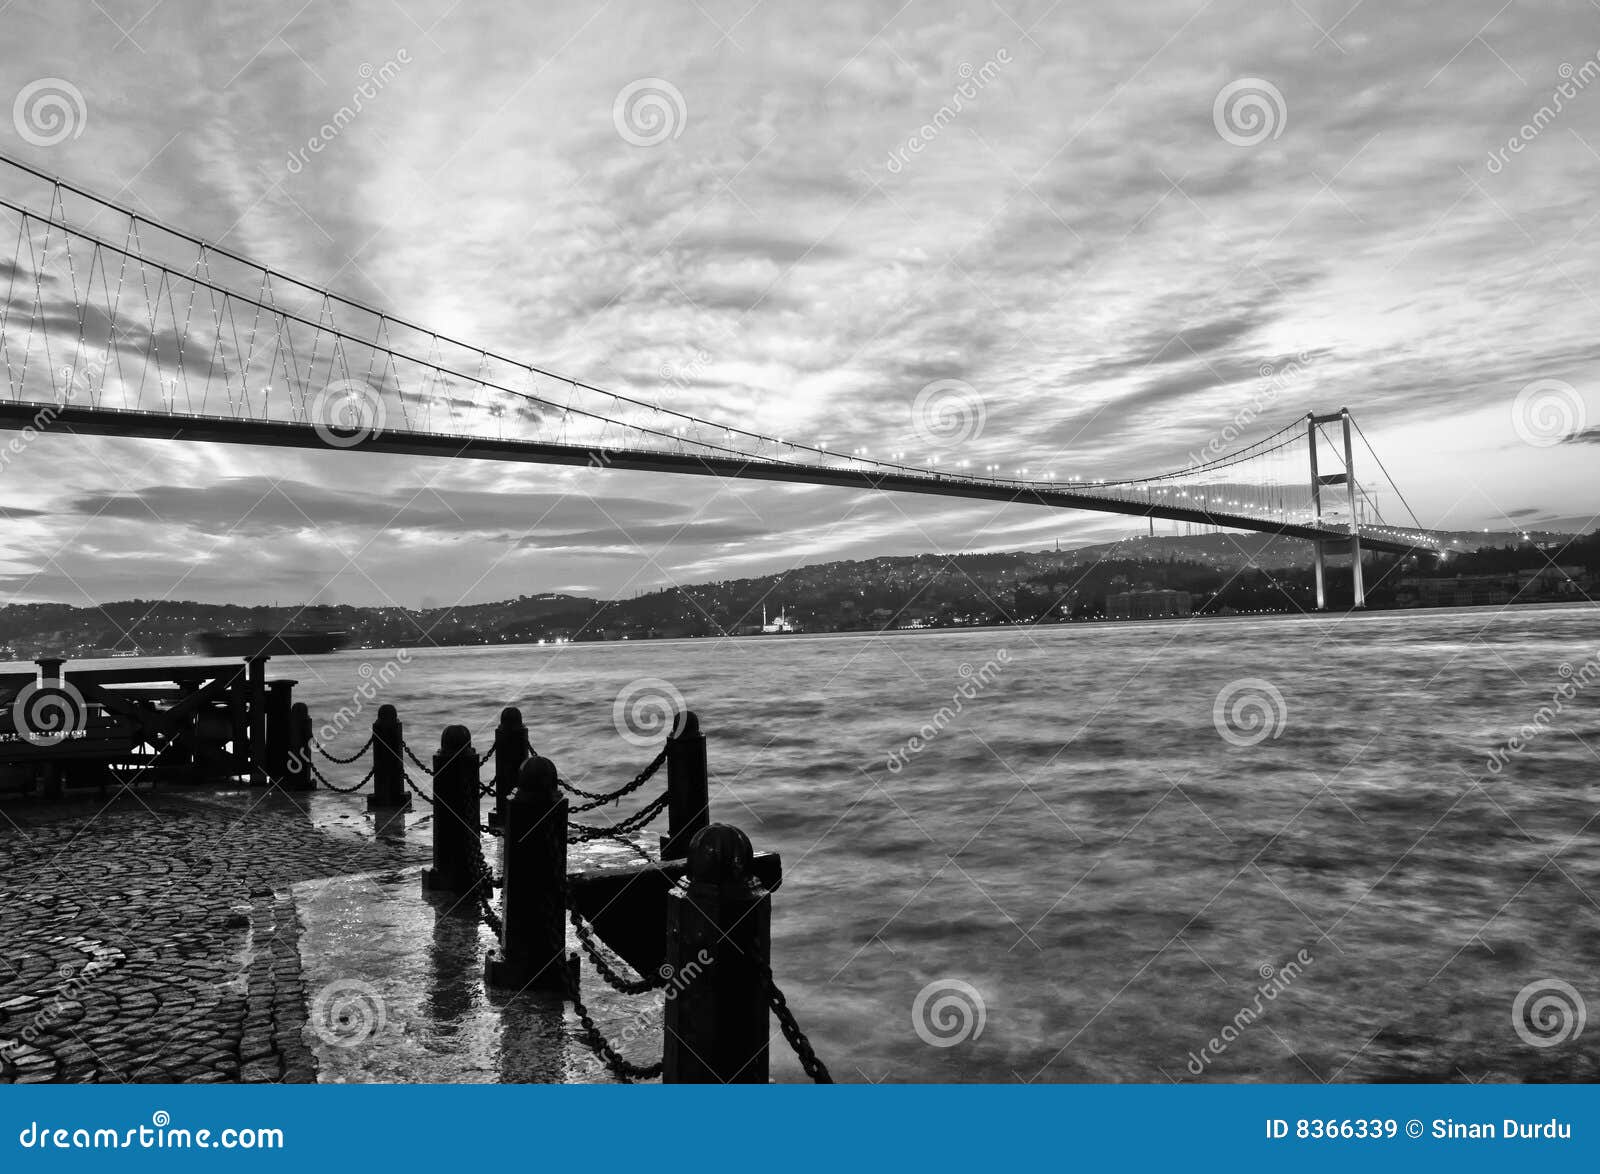 bosphorus bridge, view to asia from europe, istanb